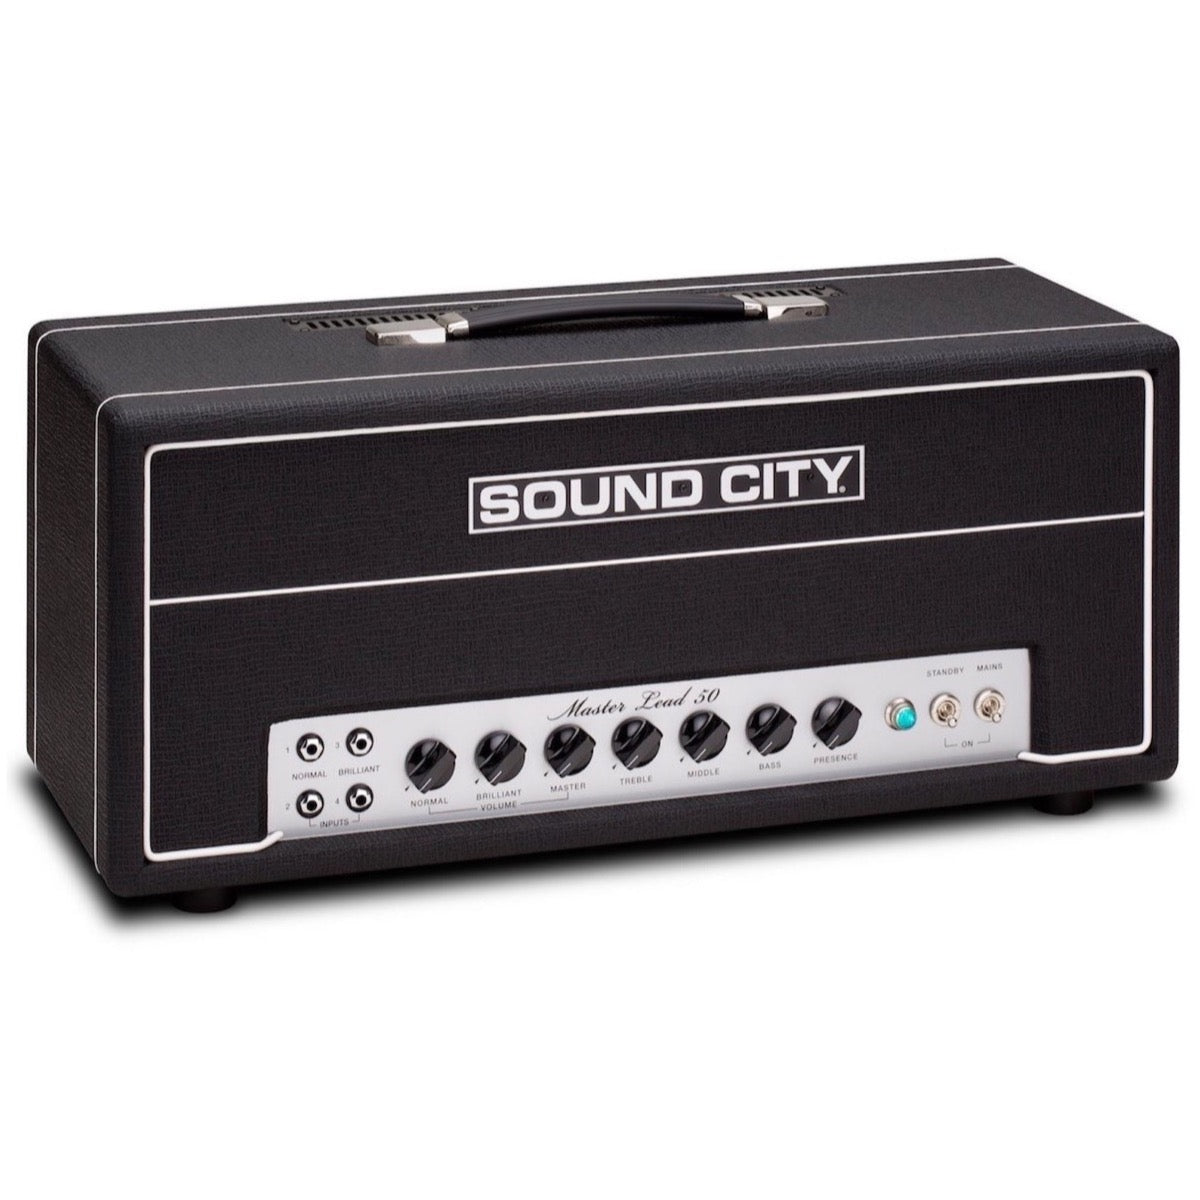 Sound City Master Lead 50 Guitar Amplifier Head (50 Watts)